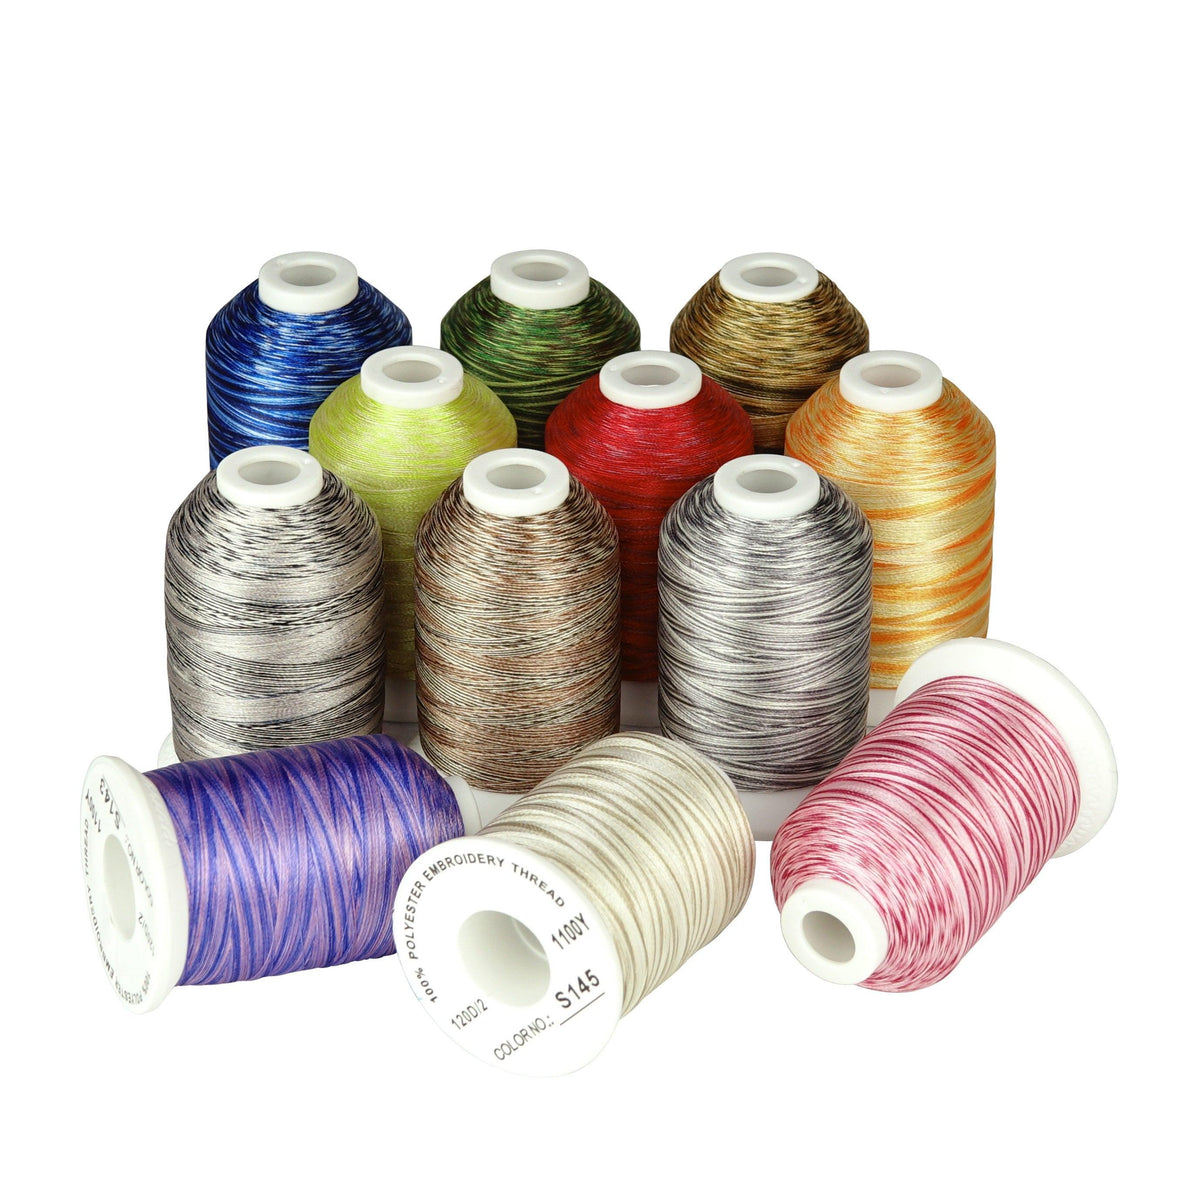 Simthread Glow in The Dark Machine Embroidery Thread 1000yards(1000M) 5 Spools S